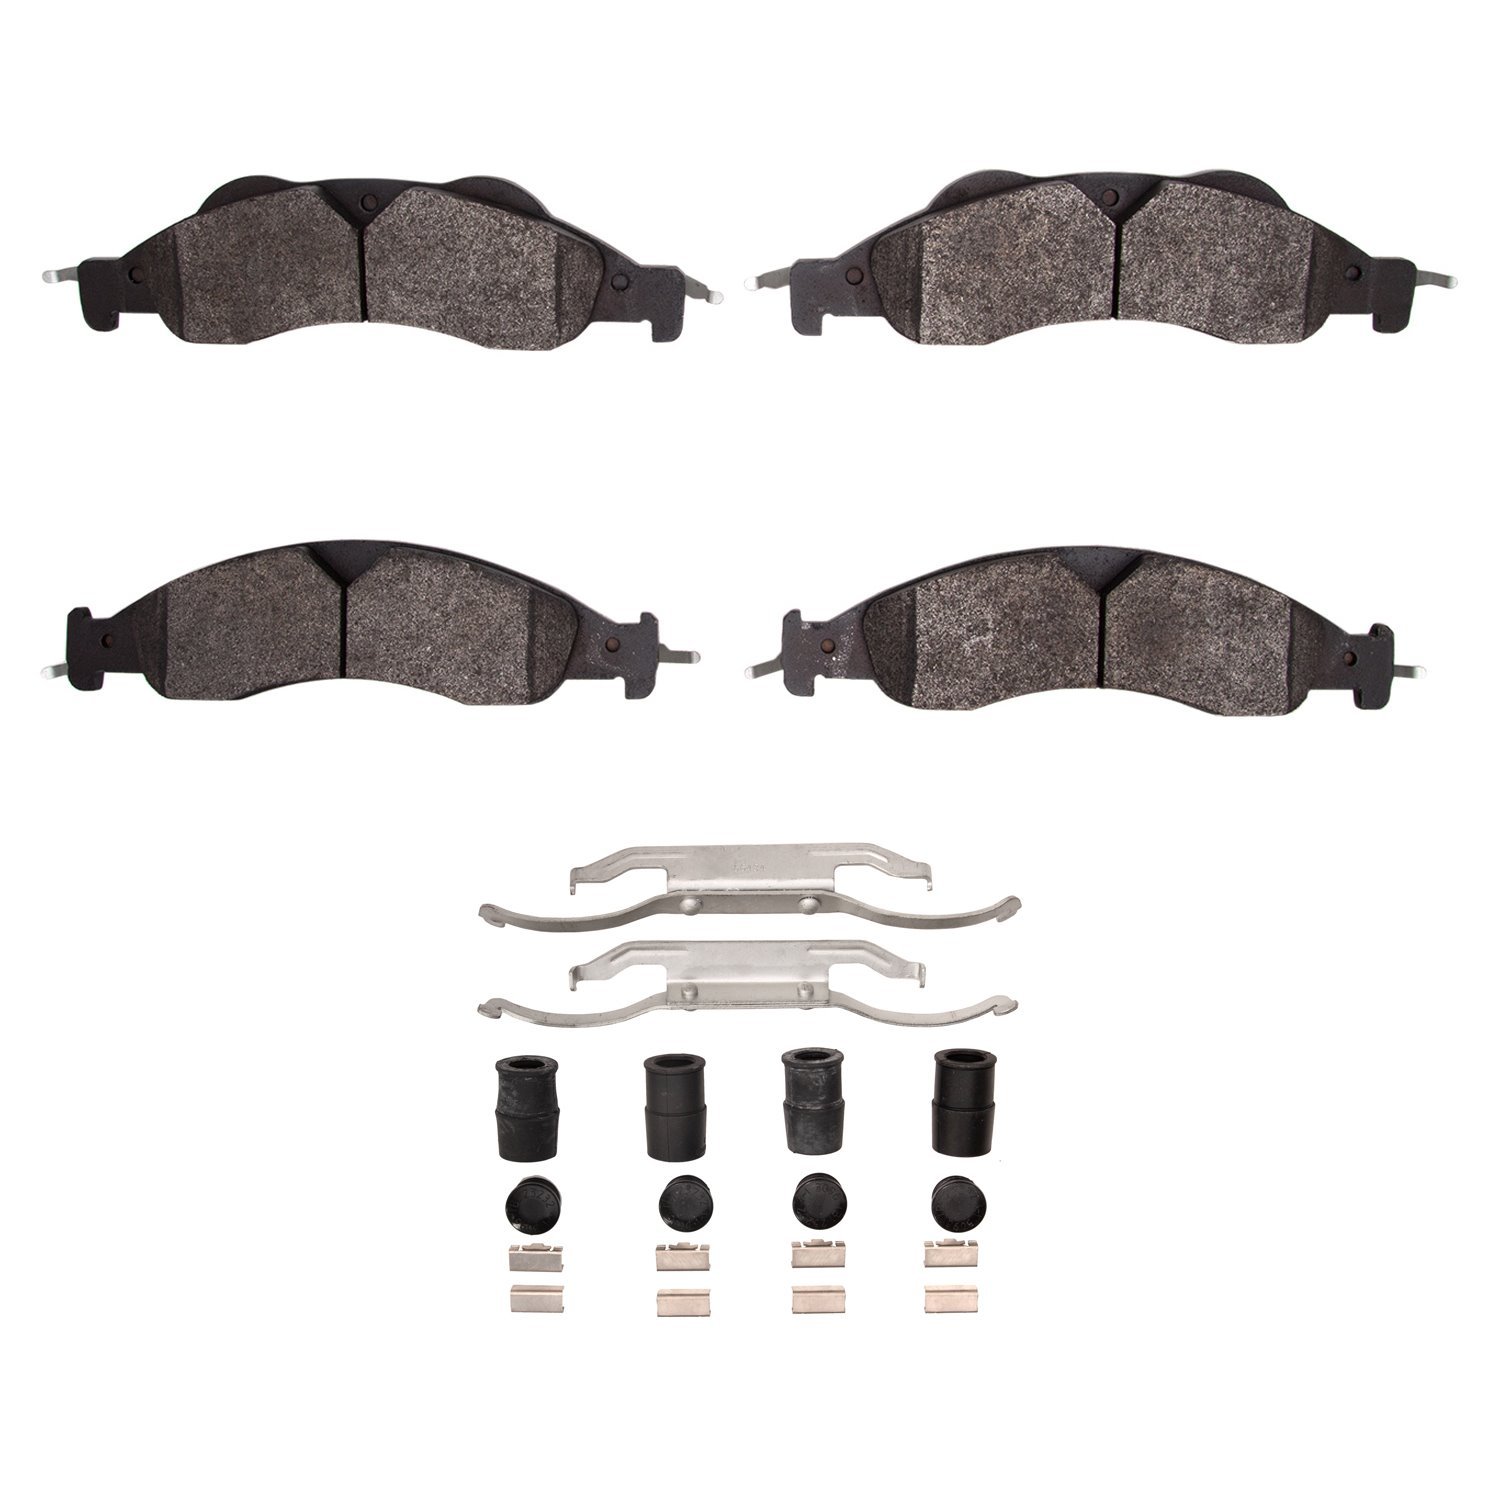 1310-1278-01 3000-Series Ceramic Brake Pads & Hardware Kit, 2007-2009 Ford/Lincoln/Mercury/Mazda, Position: Front